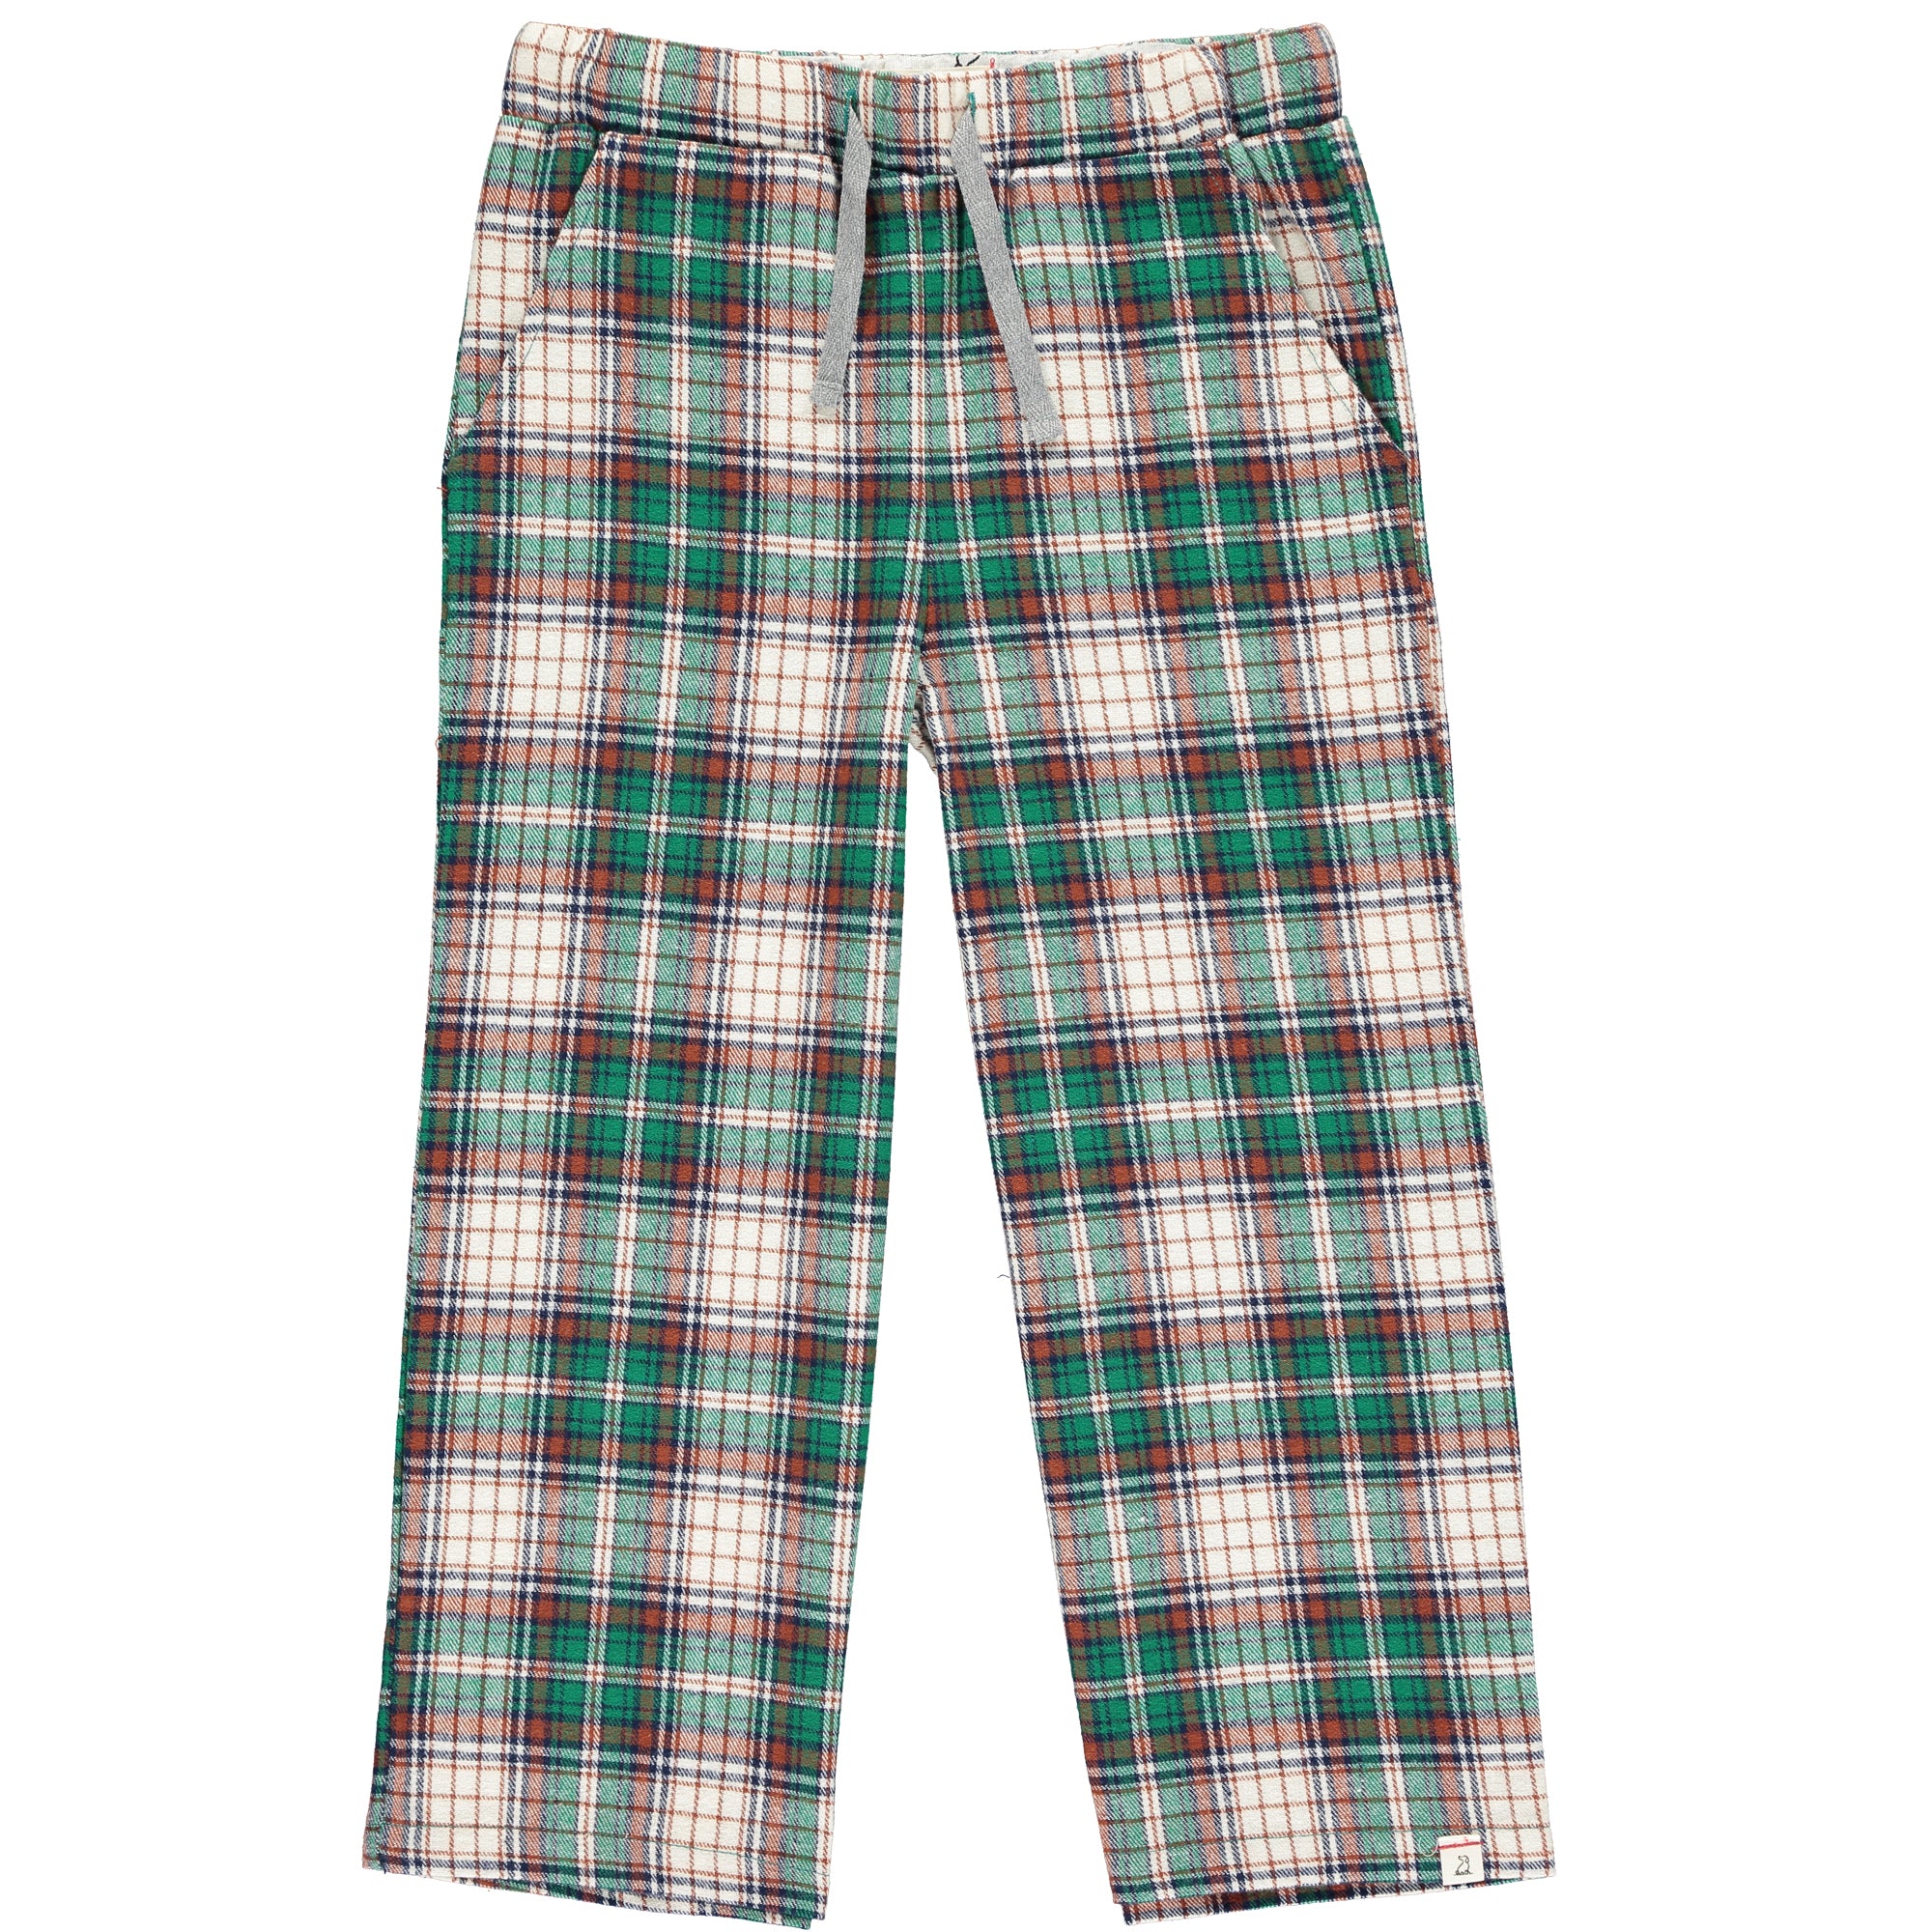 Green/Brown/Navy Plaid Lounge Pants